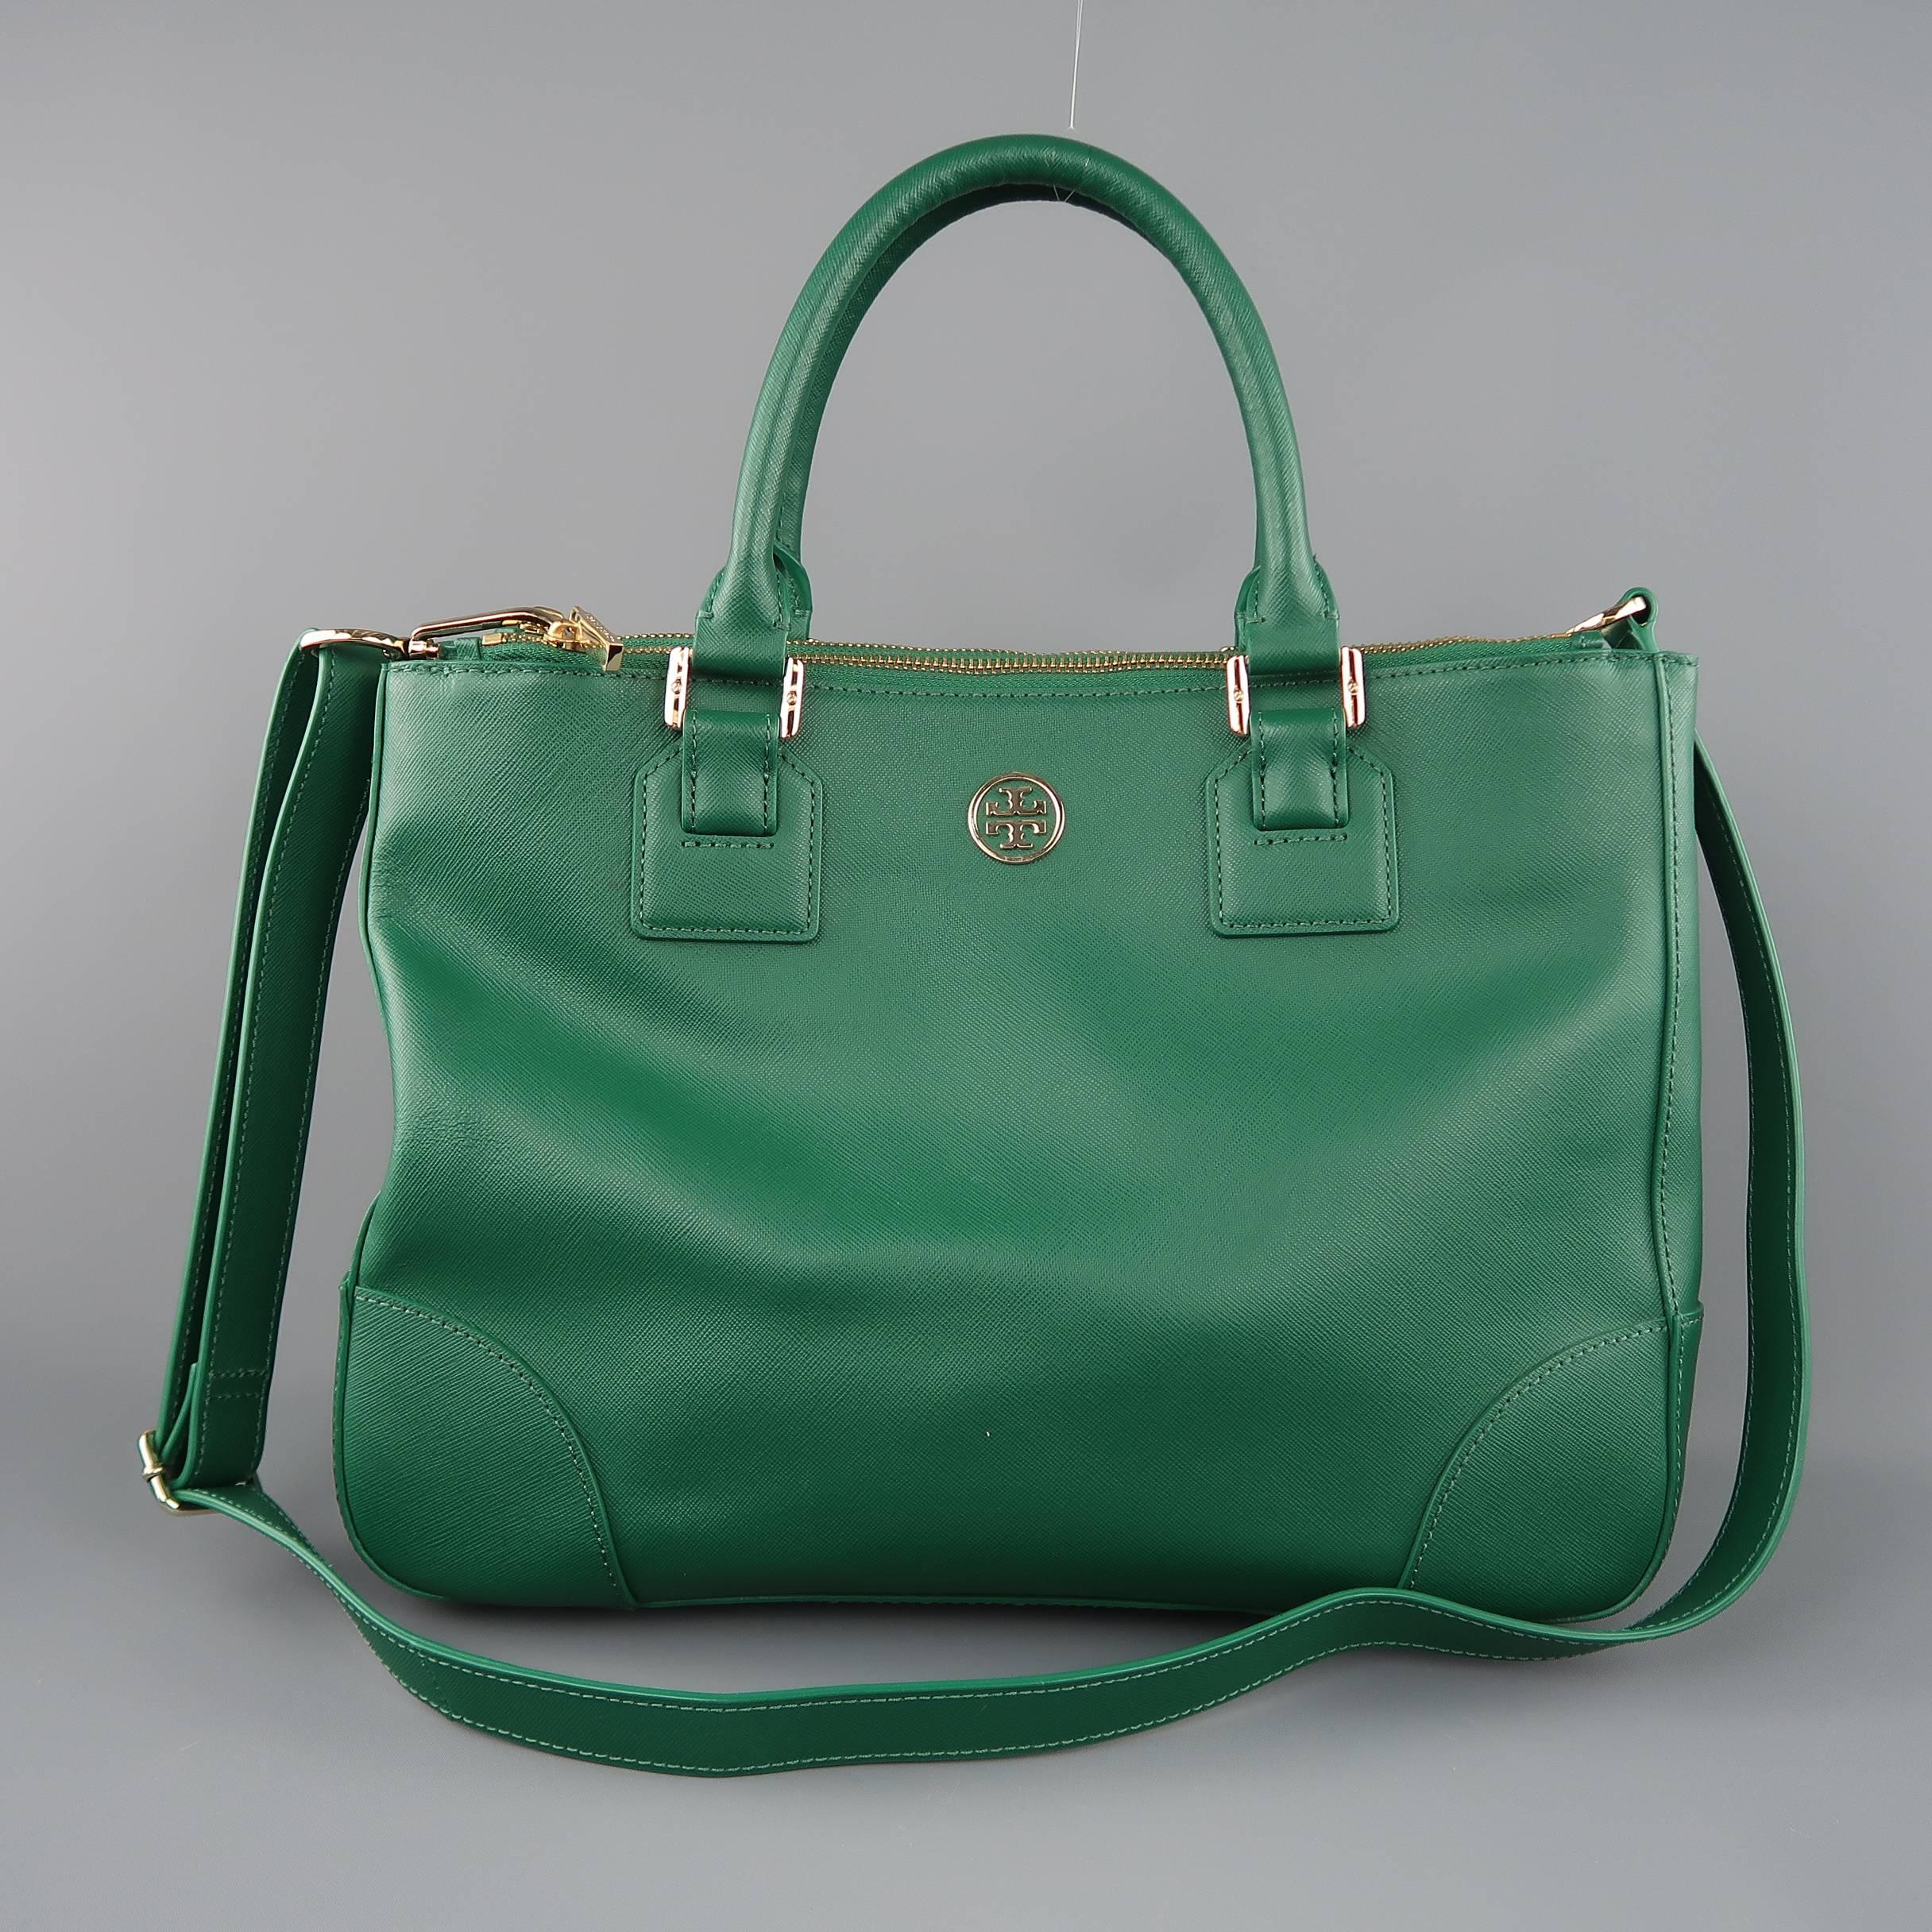 TORY BURCH Green Leather ROBINSON Tote Handbag 3